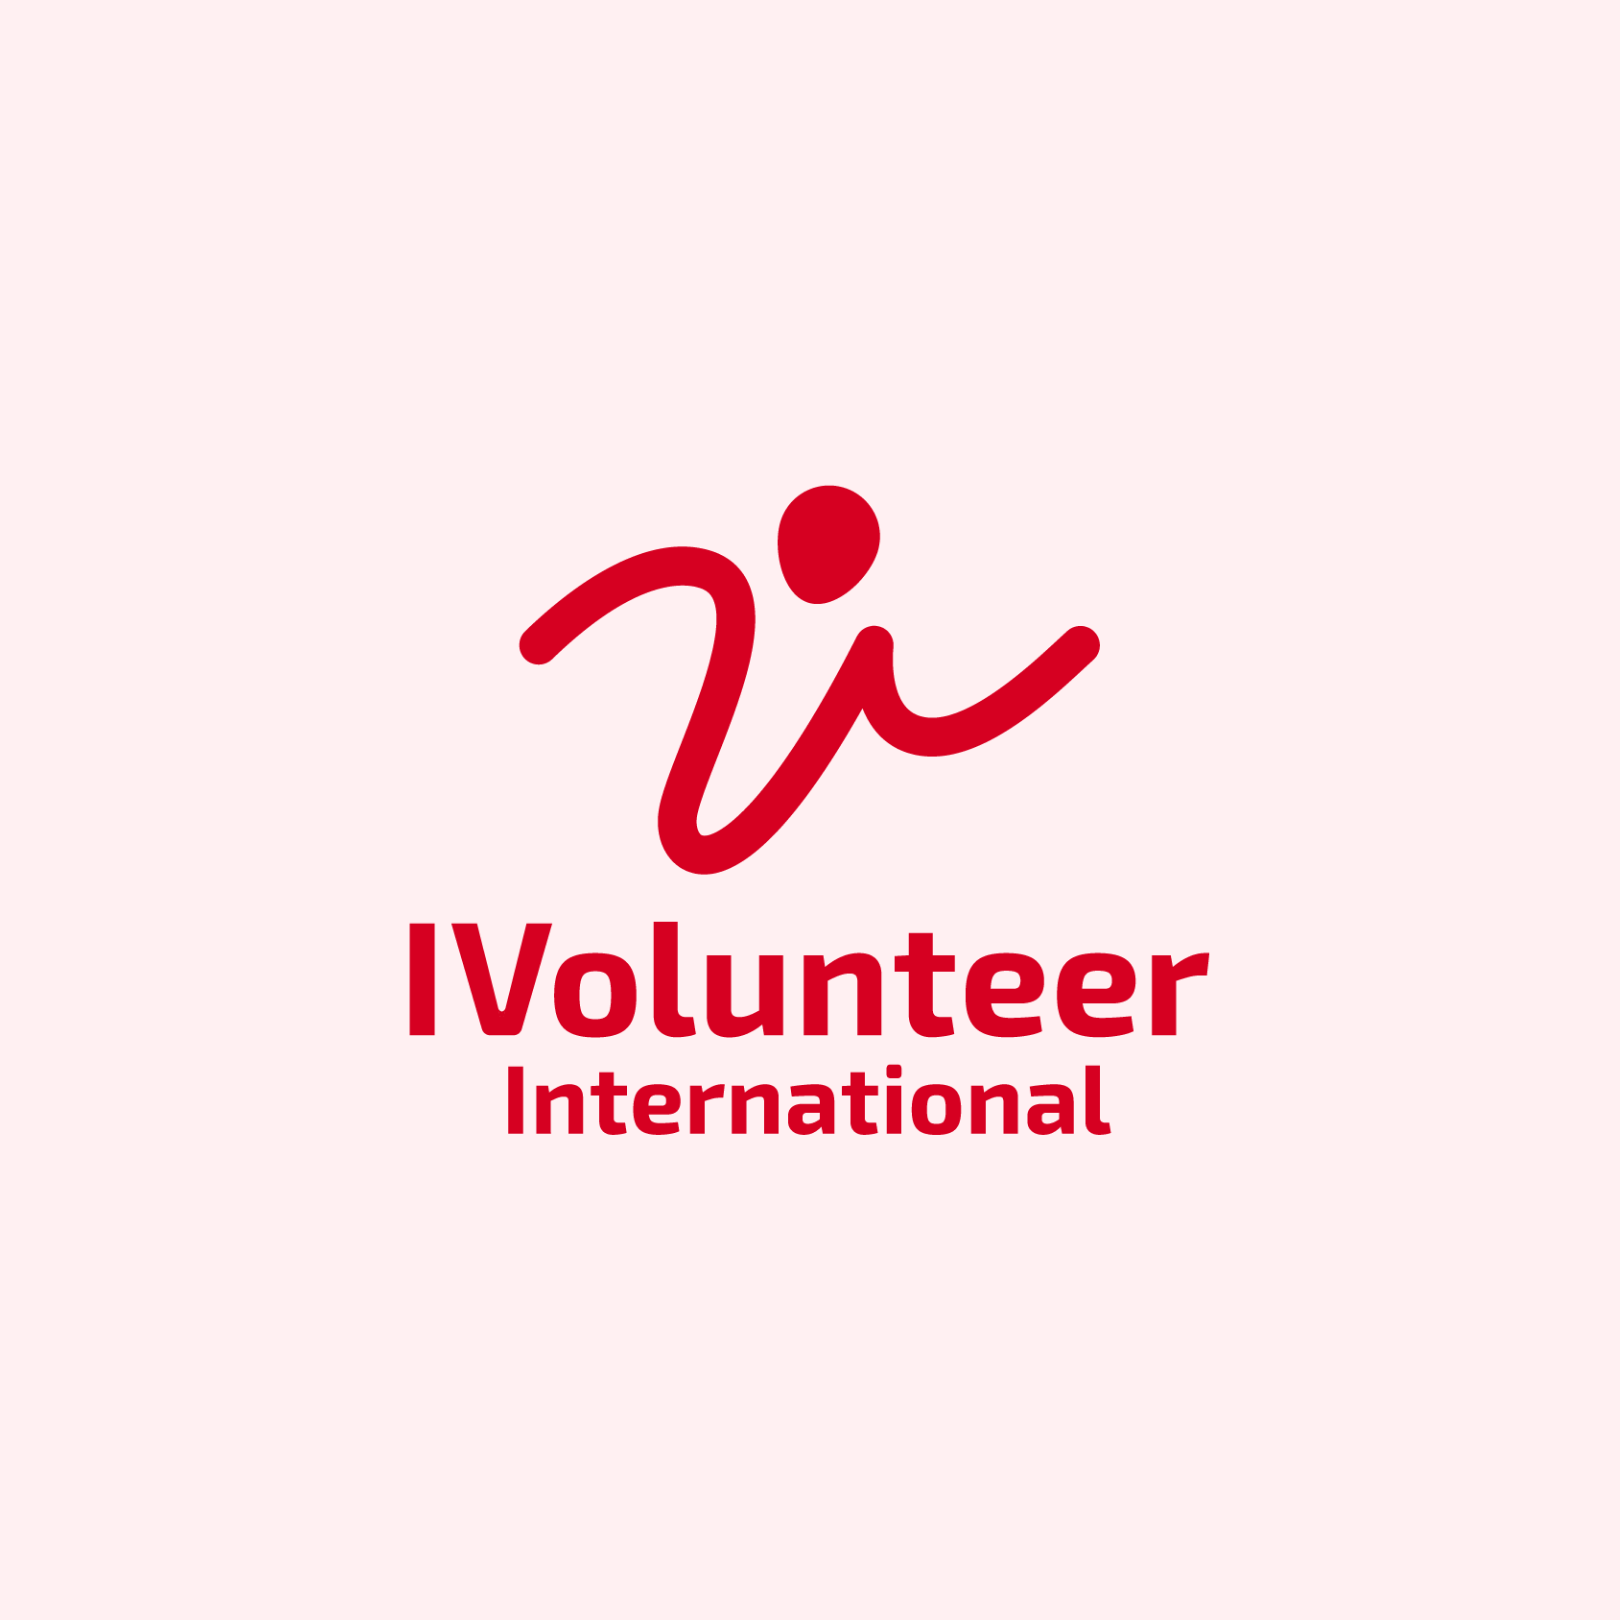 IVolunteer International logo in pink background